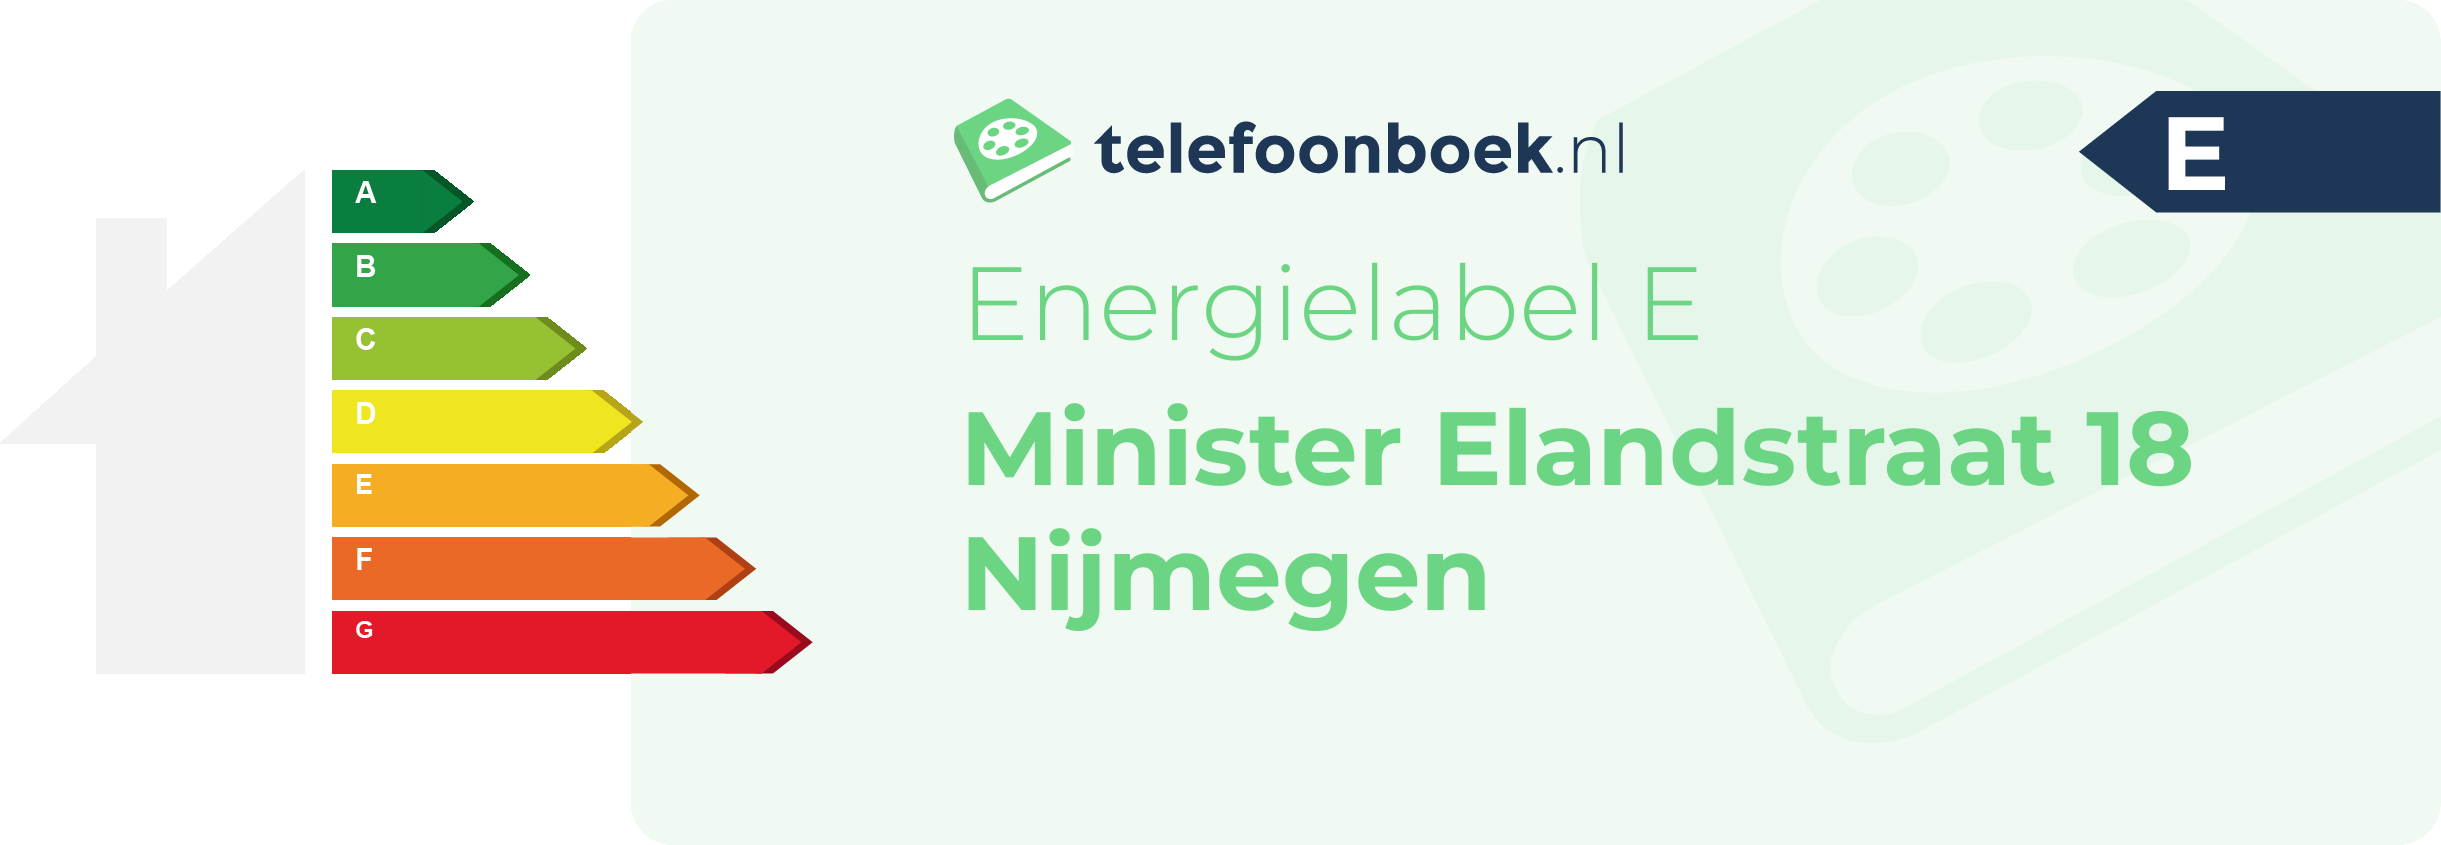 Energielabel Minister Elandstraat 18 Nijmegen